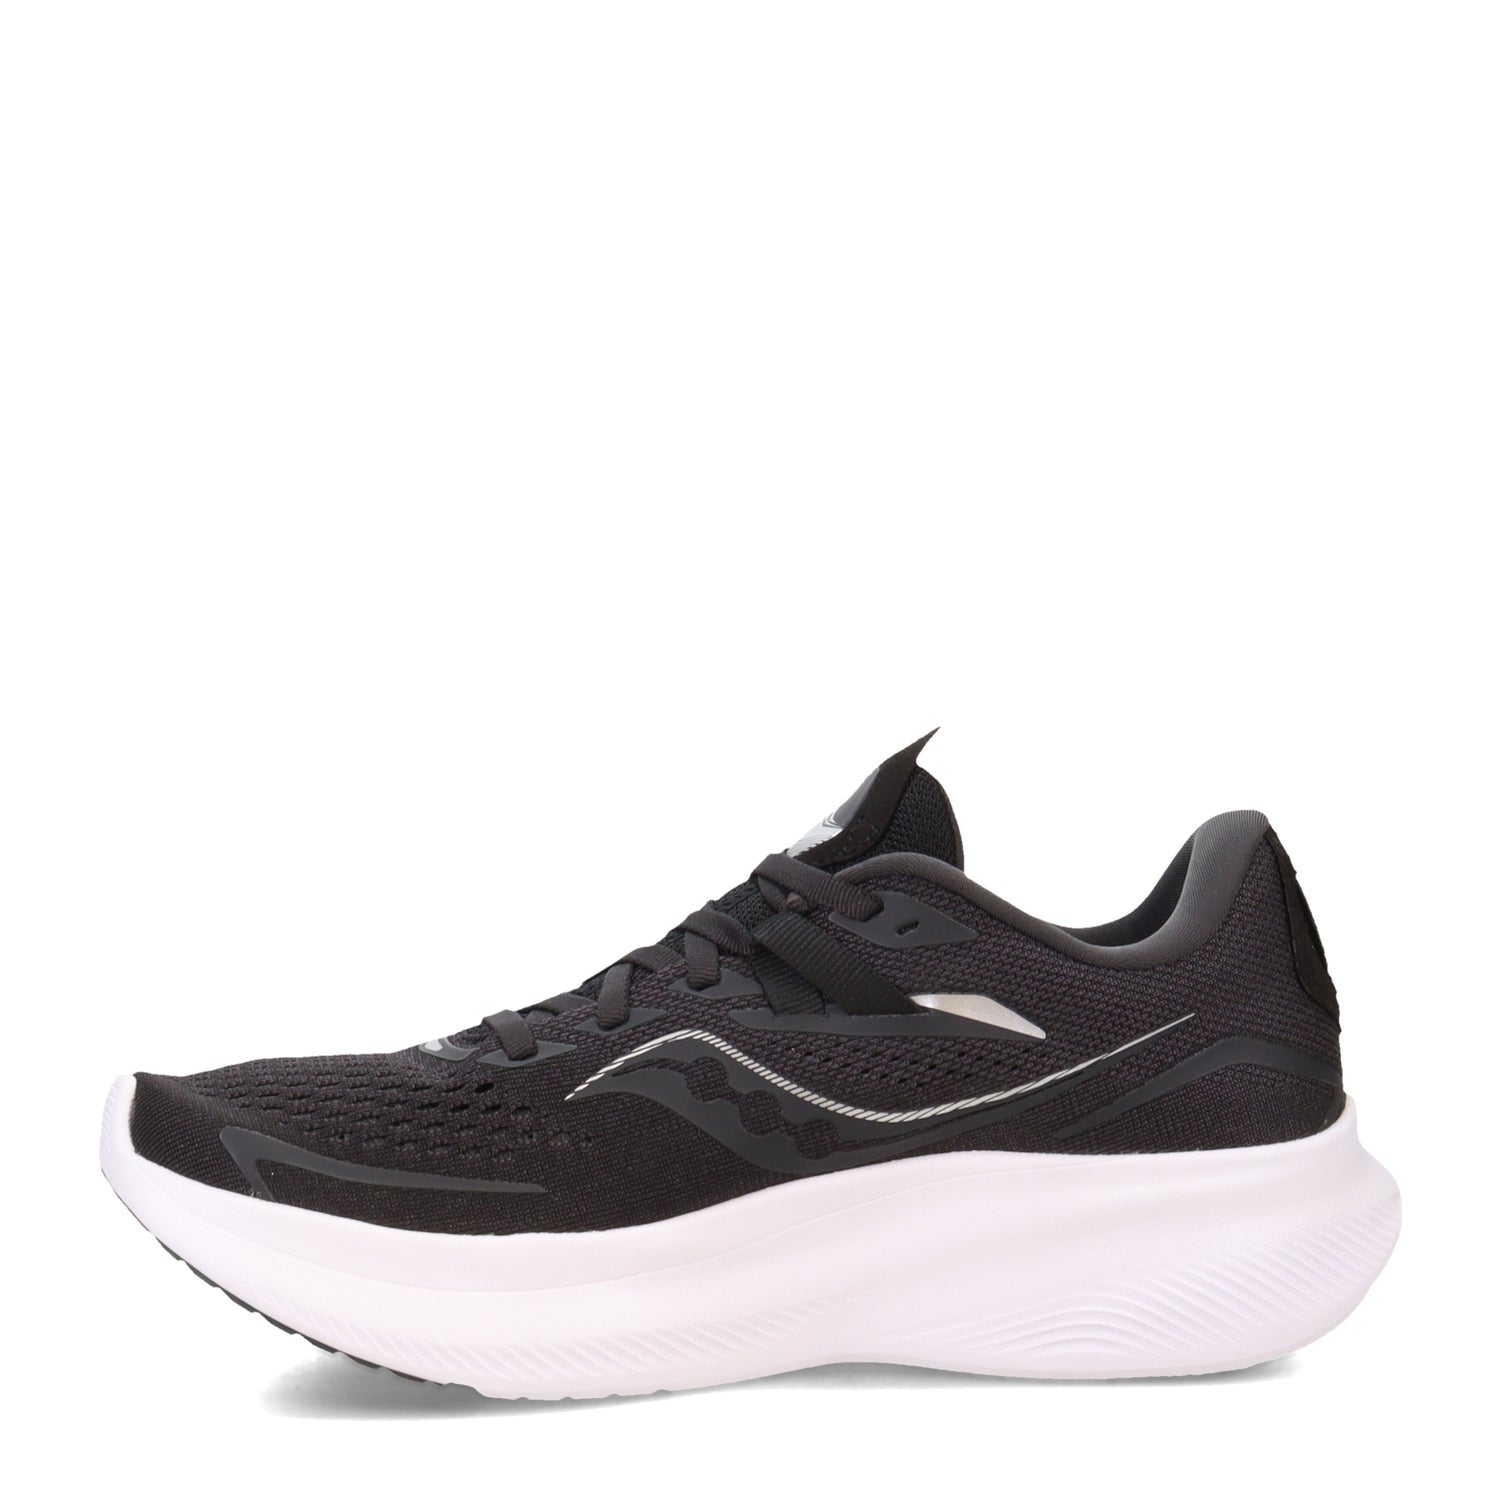 Peltz Shoes  Women's Saucony Ride 15 Sneaker BLACK WHITE S10729-05